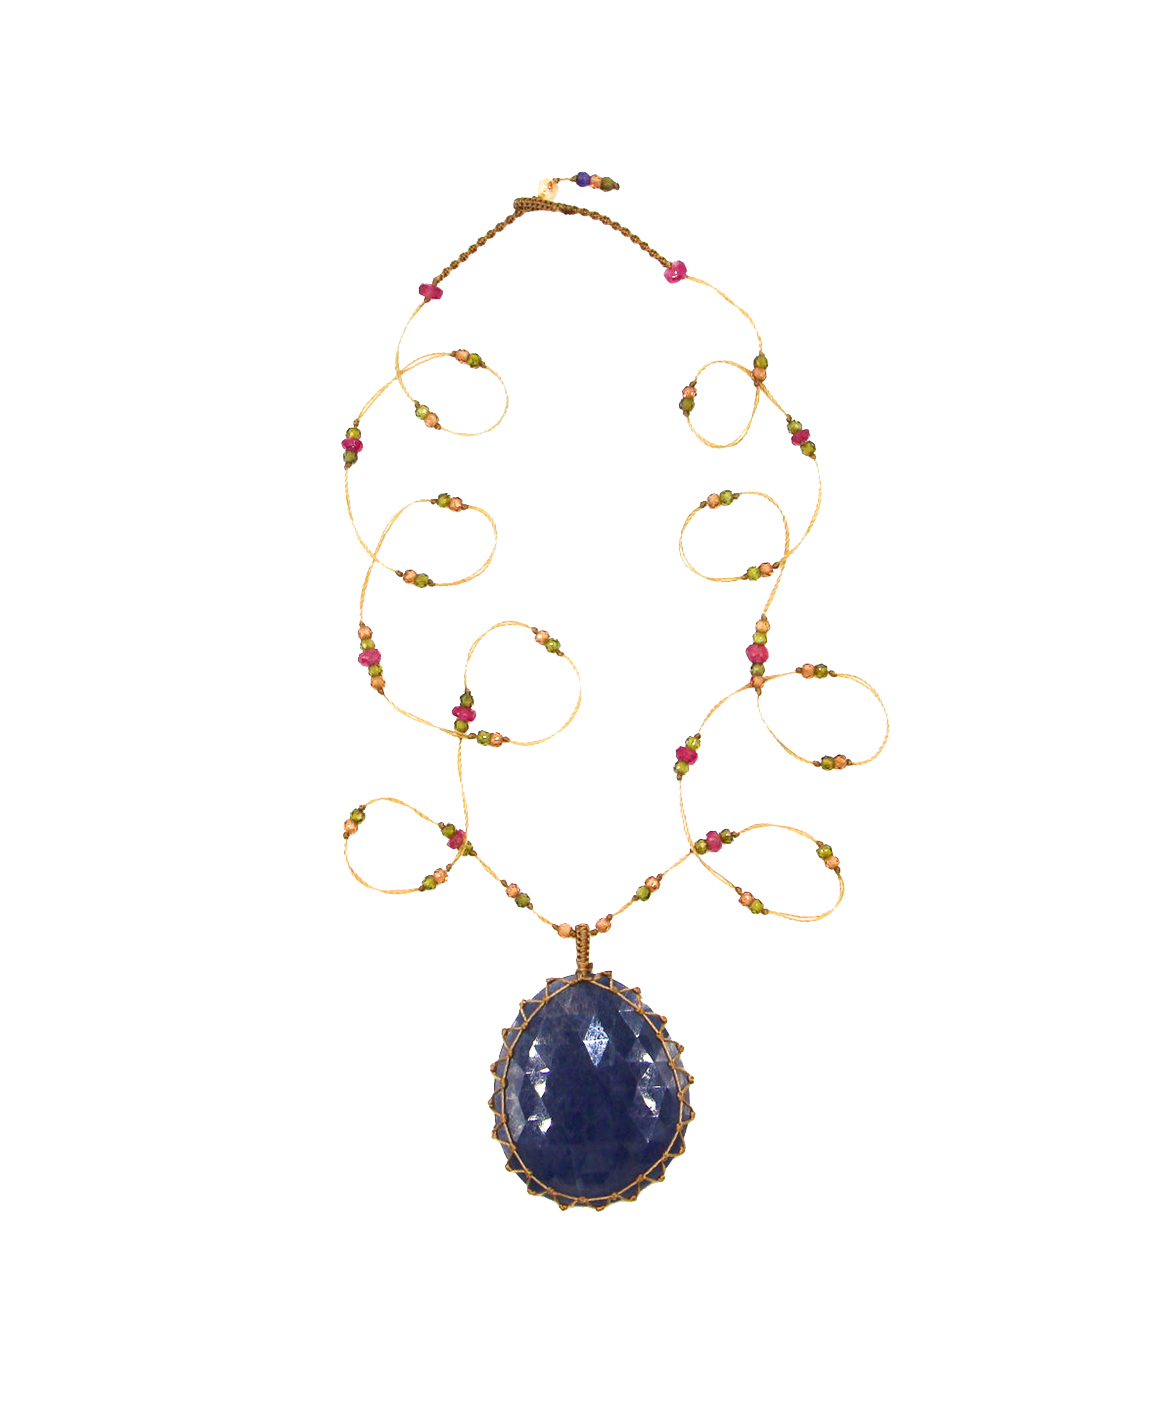 Tibetan Long Necklace - Blue Corundum - Mix Multi Stones - Tobacco Thread